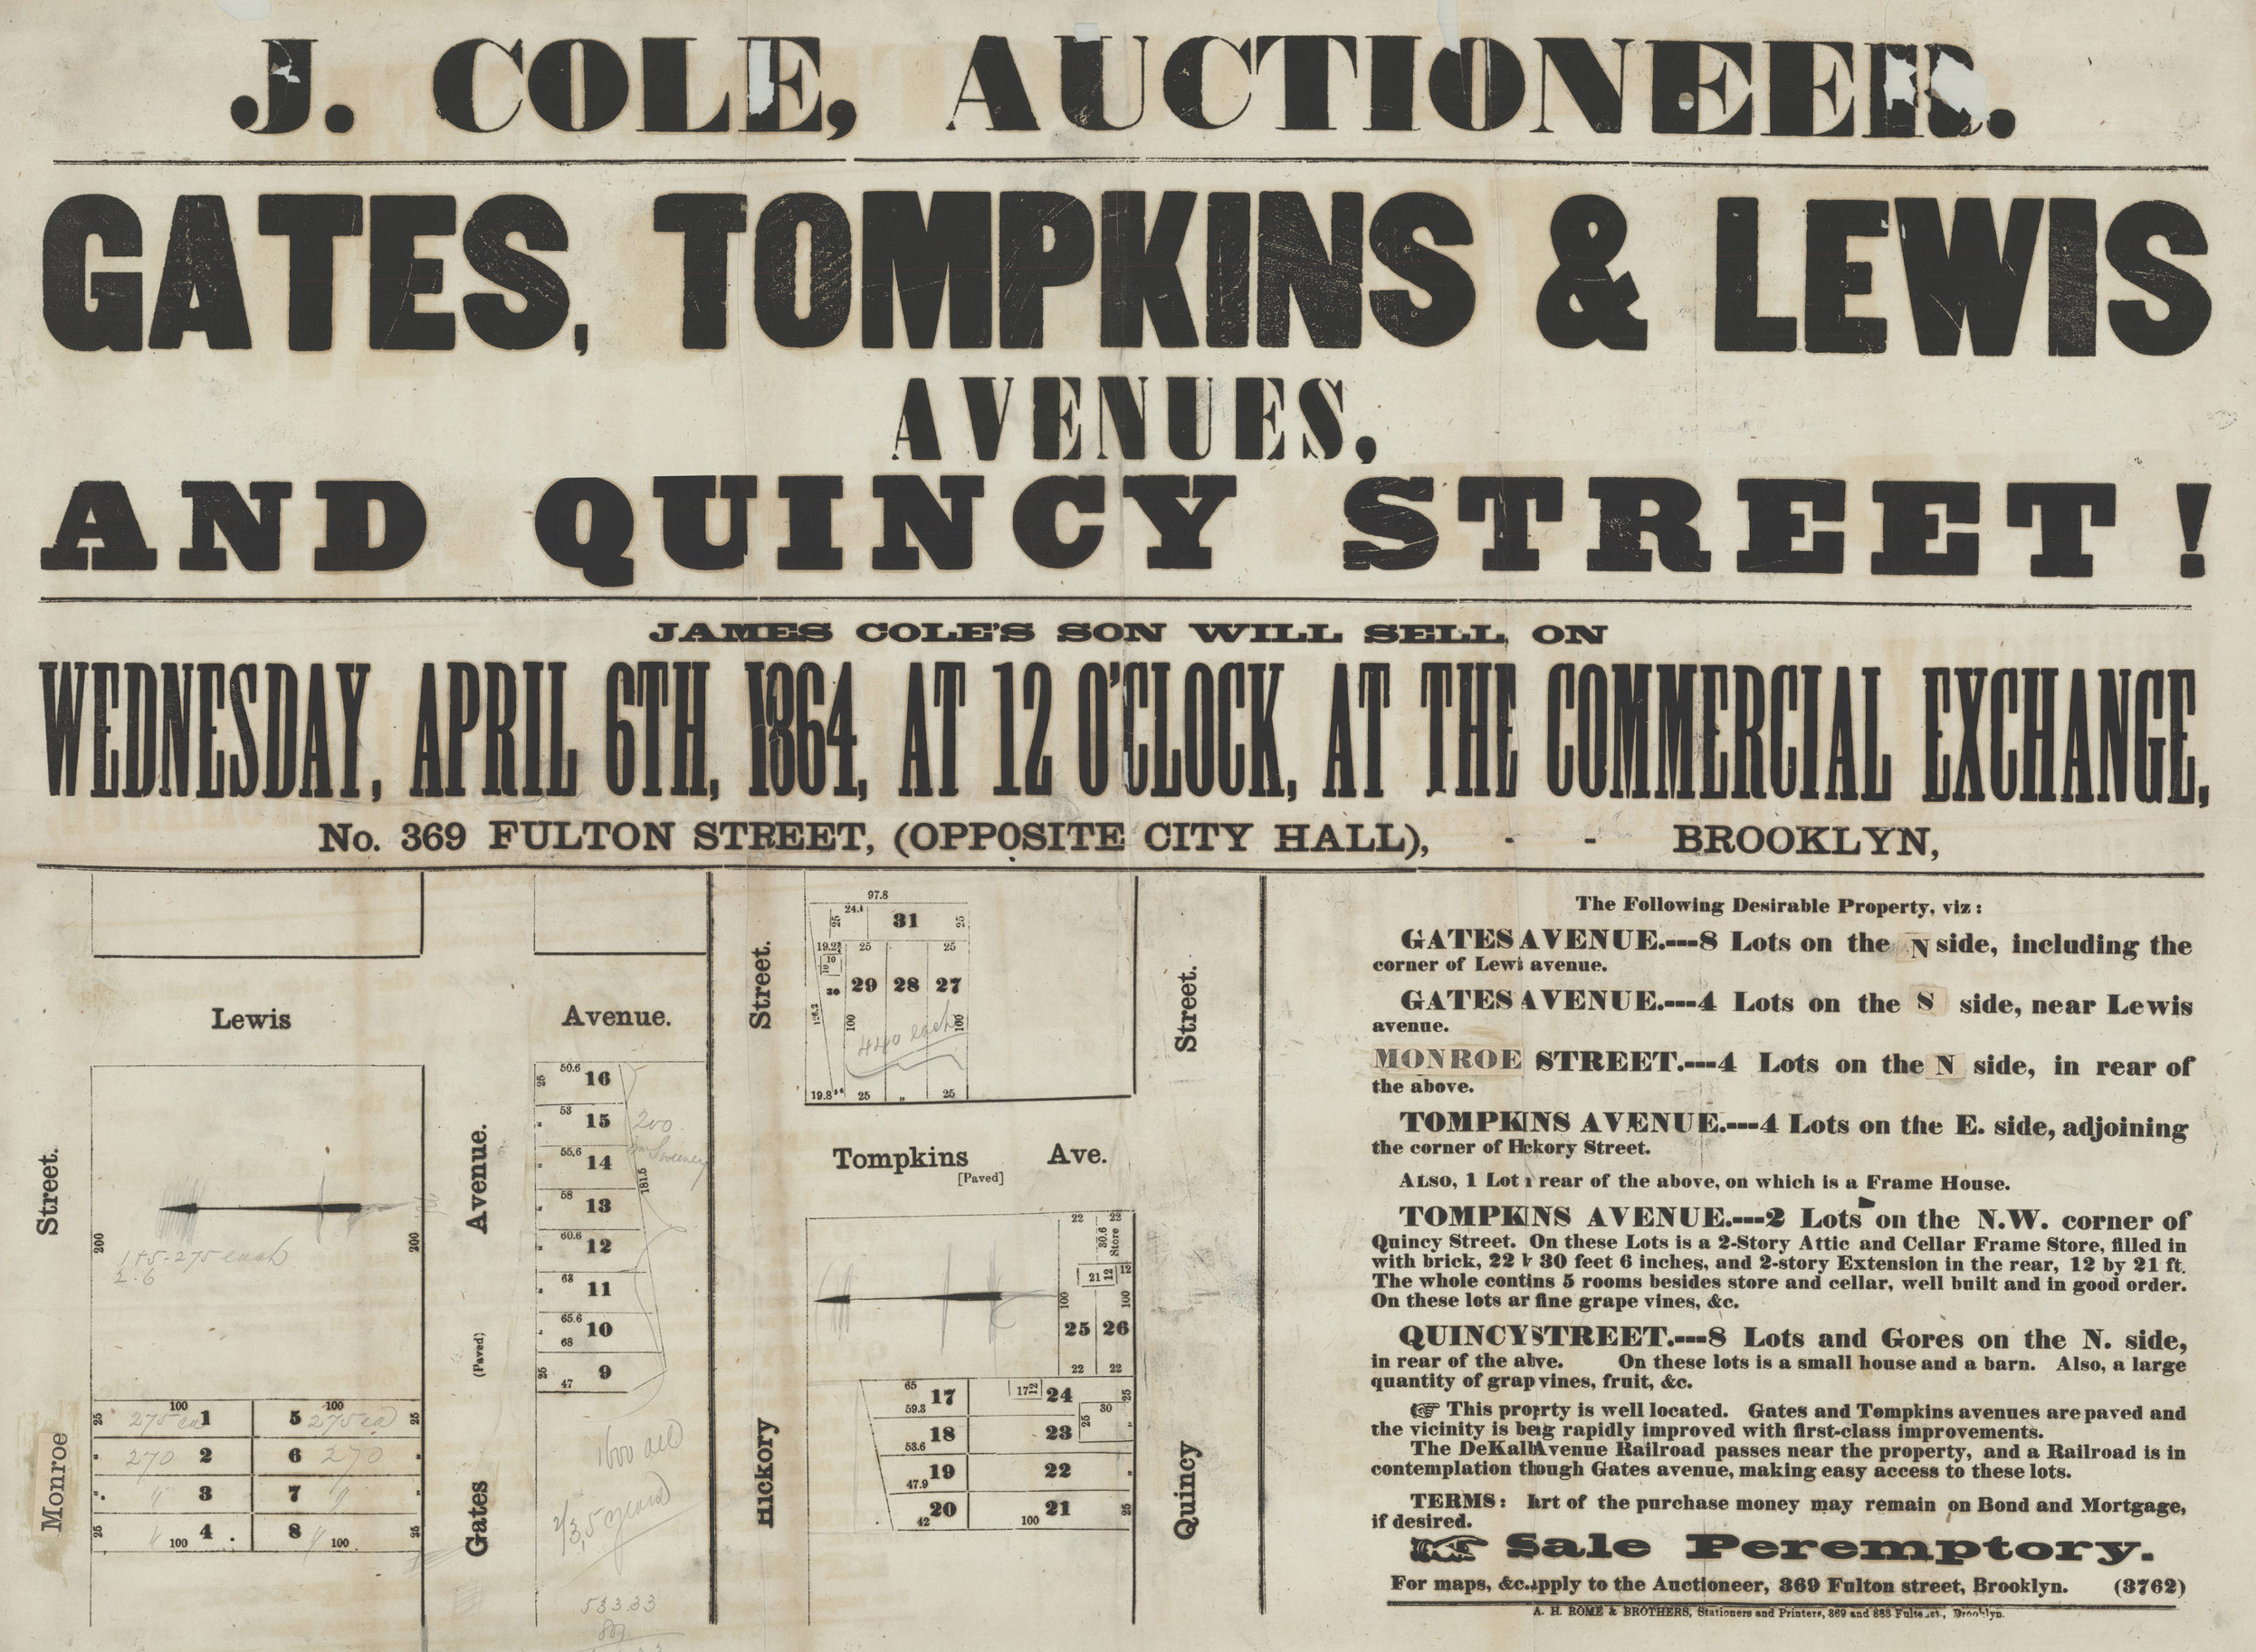 1864 auction broadside